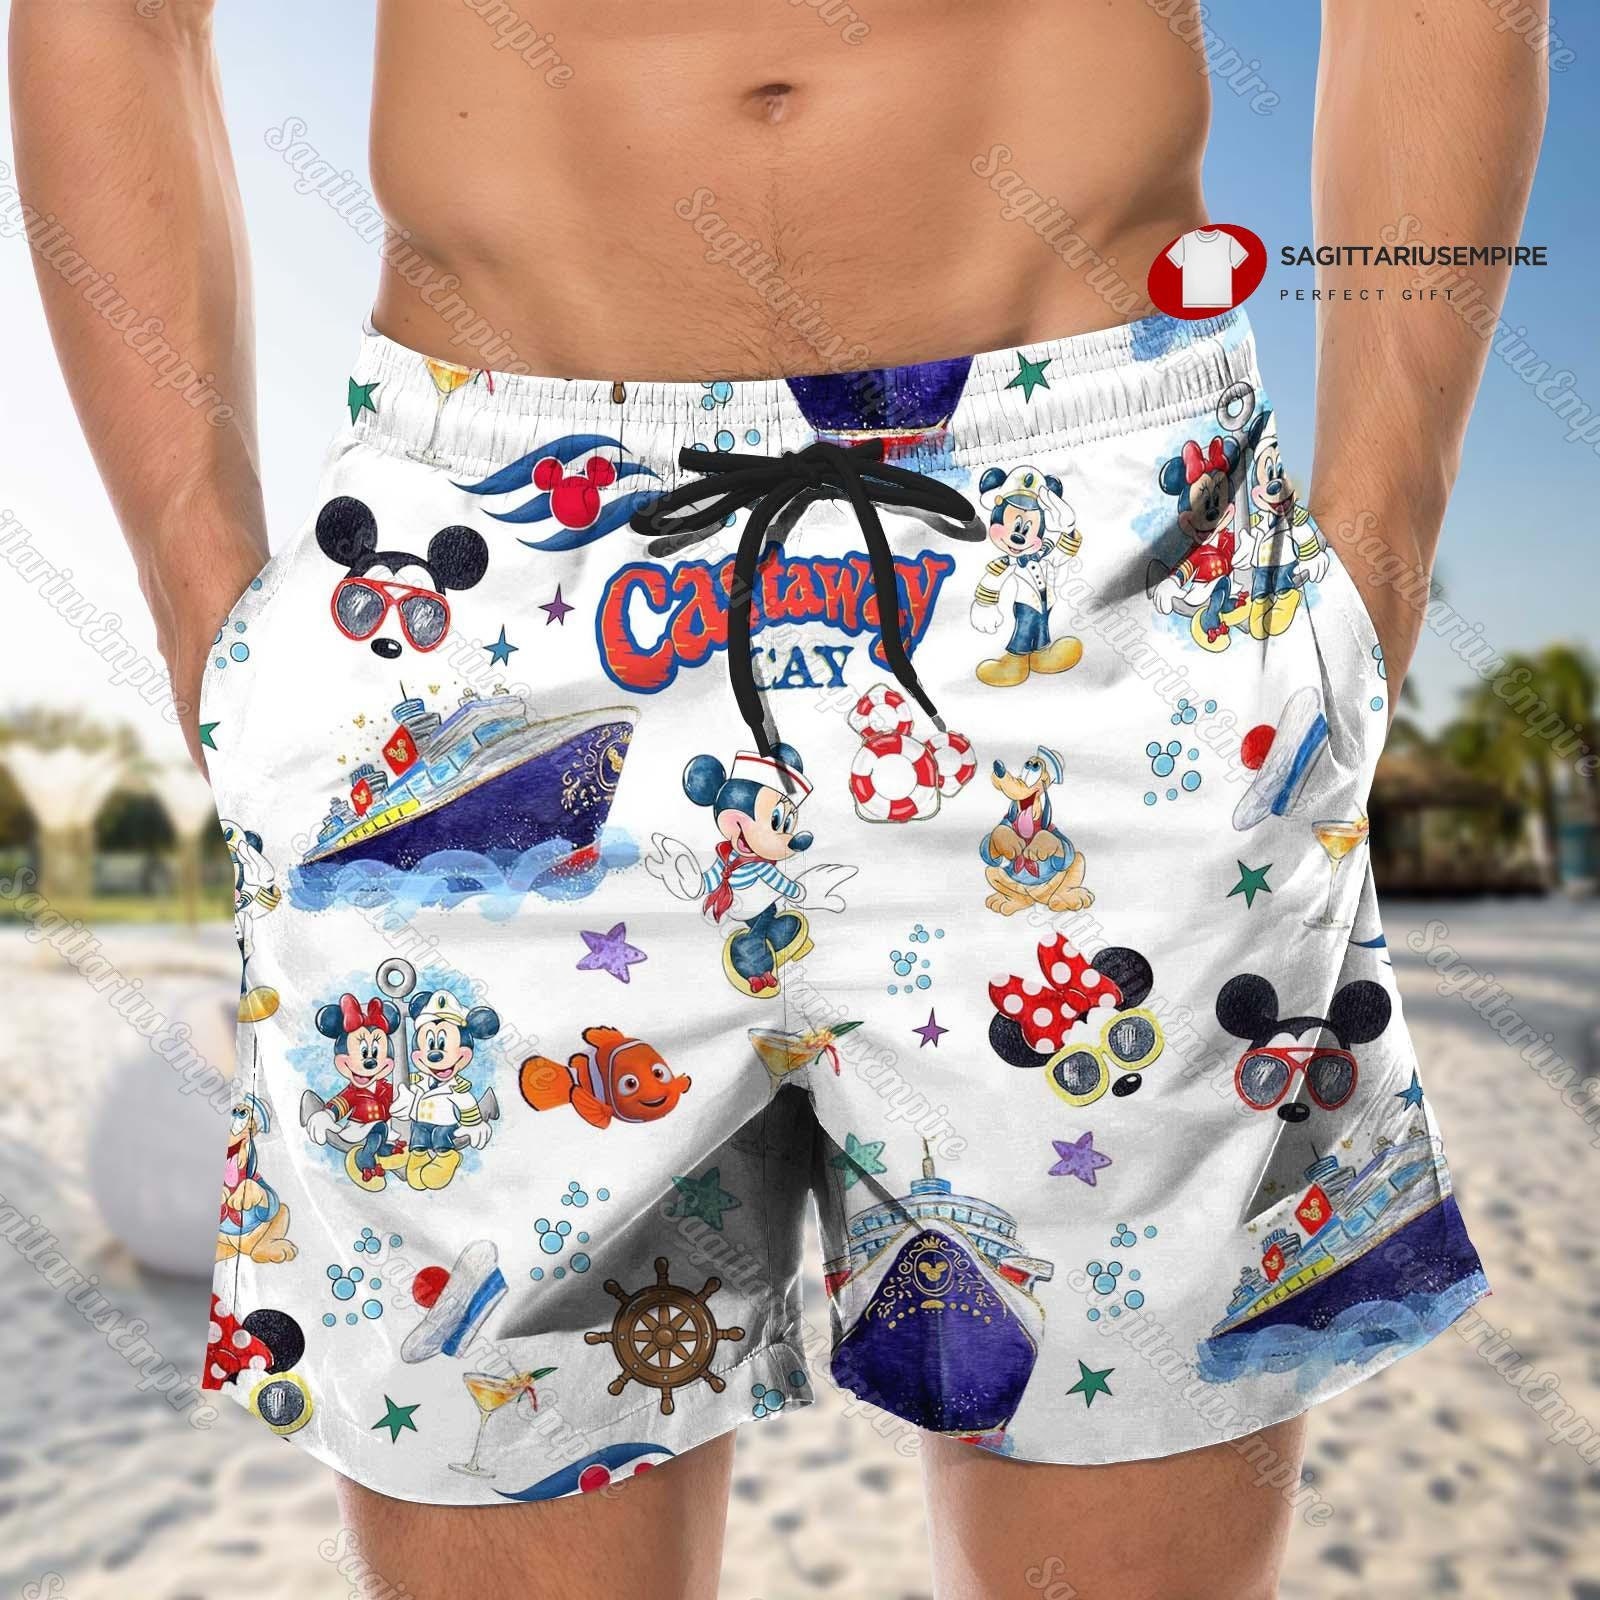 Disney Button Shirt And Shorts, Mickey Minnie Steamboat Shirt